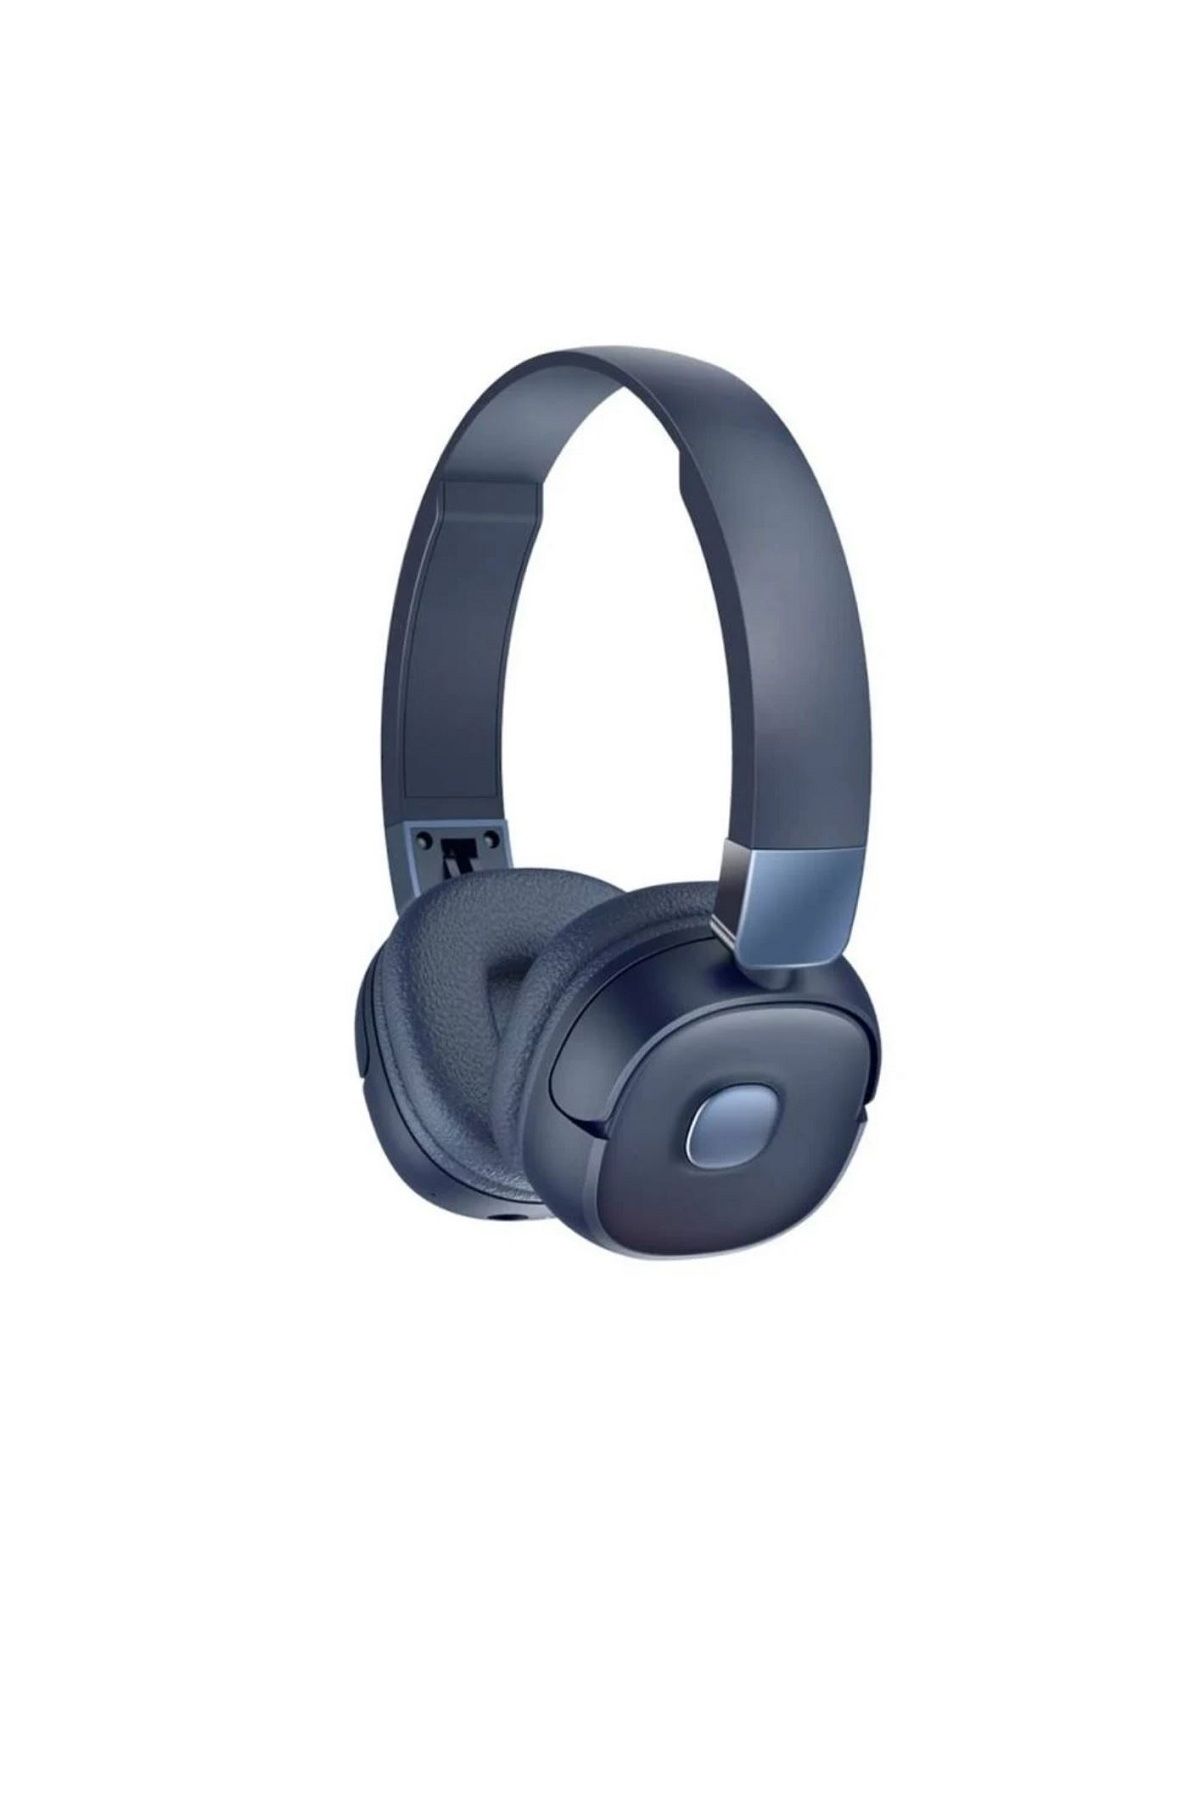 ROMİX 3D Stereo Bluetooth Kulak Üstü Kulaklık Güçlü Ses